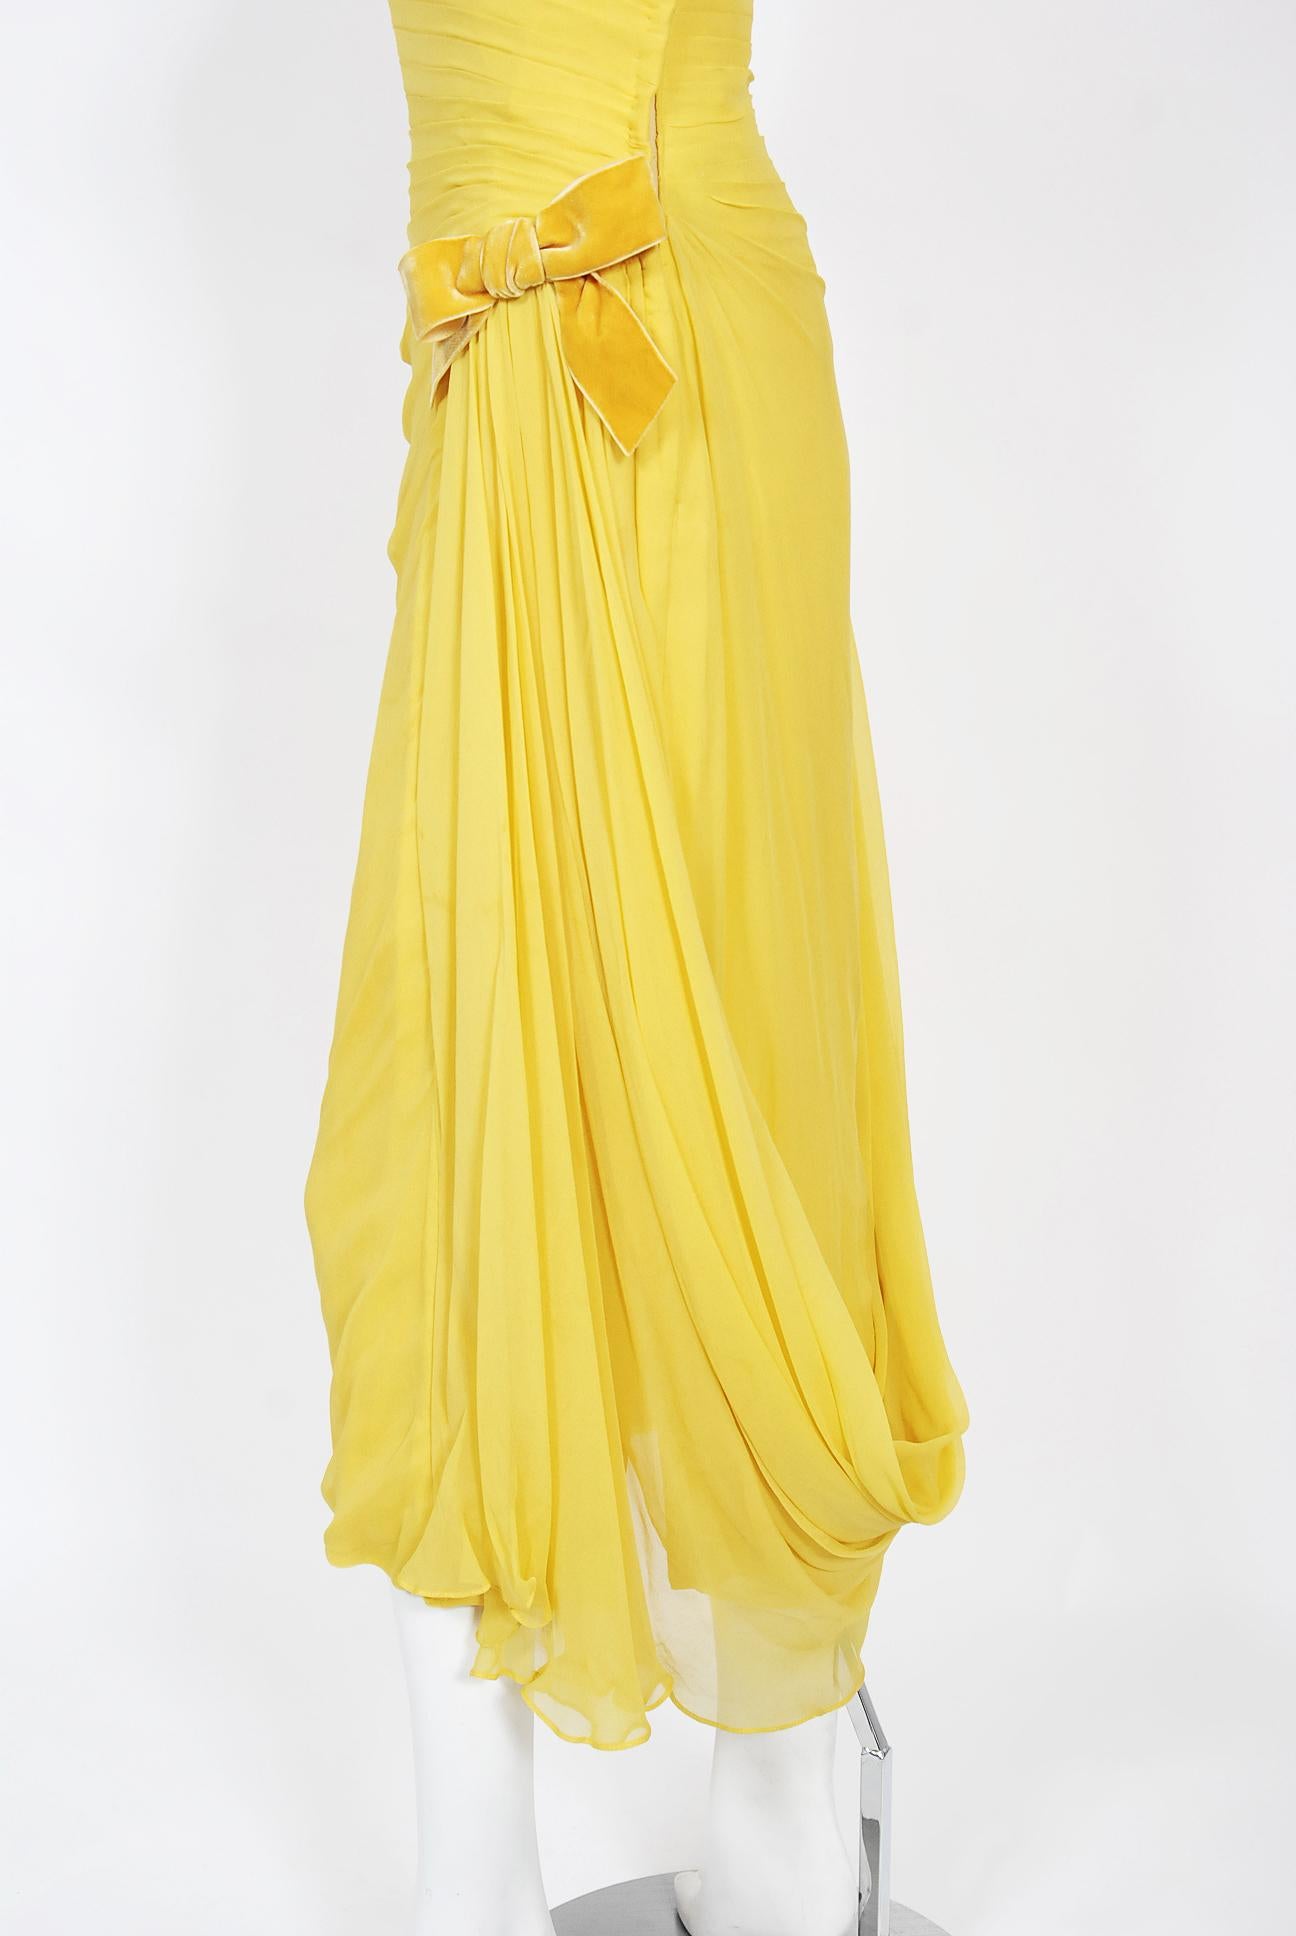 Vintage 1950's Philip Hulitar Yellow Pleated Silk Chiffon Draped Hourglass Dress For Sale 1